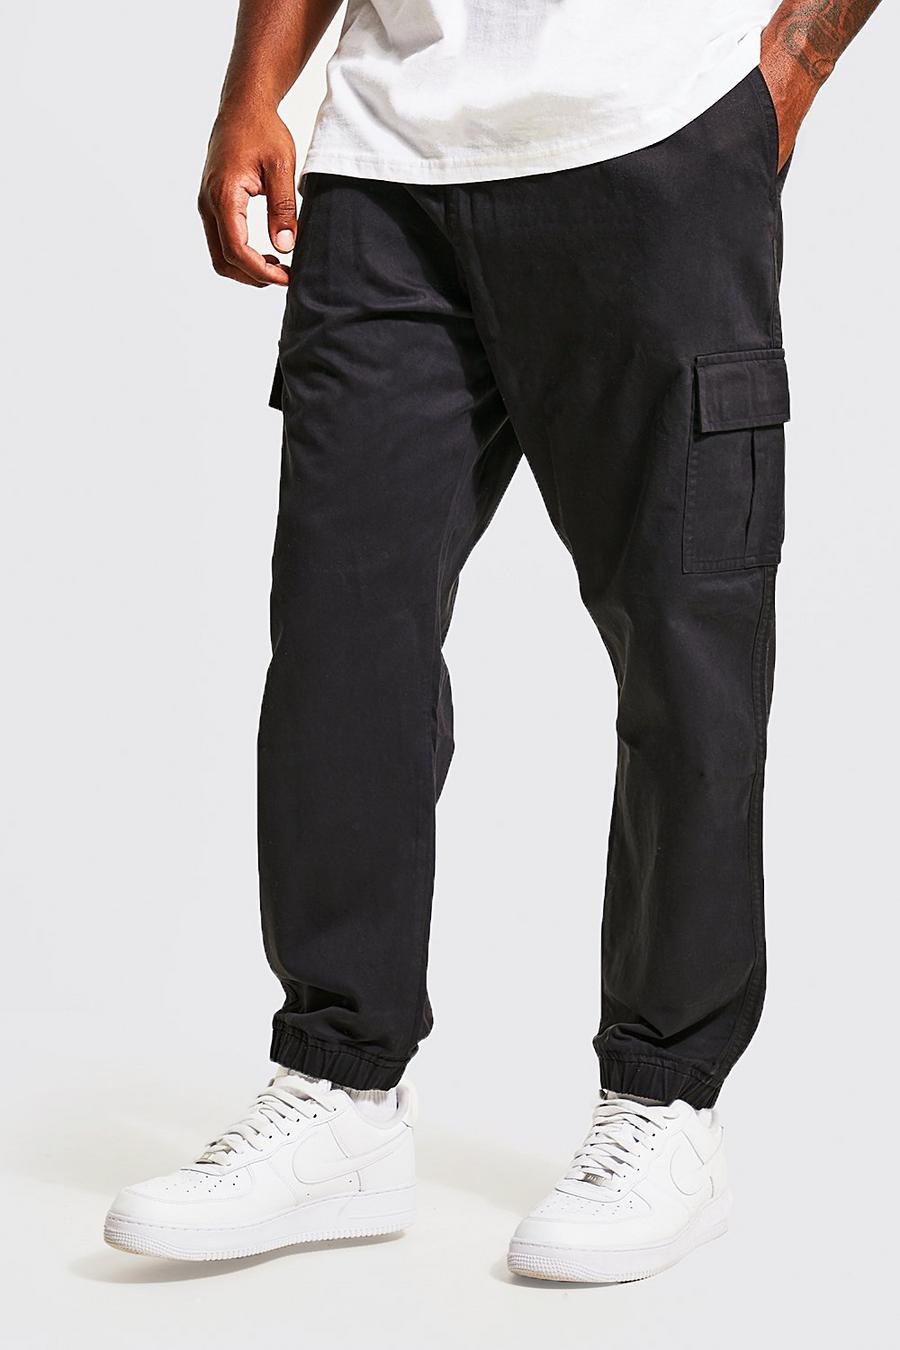 Pantalón Plus cargo Regular, Black nero